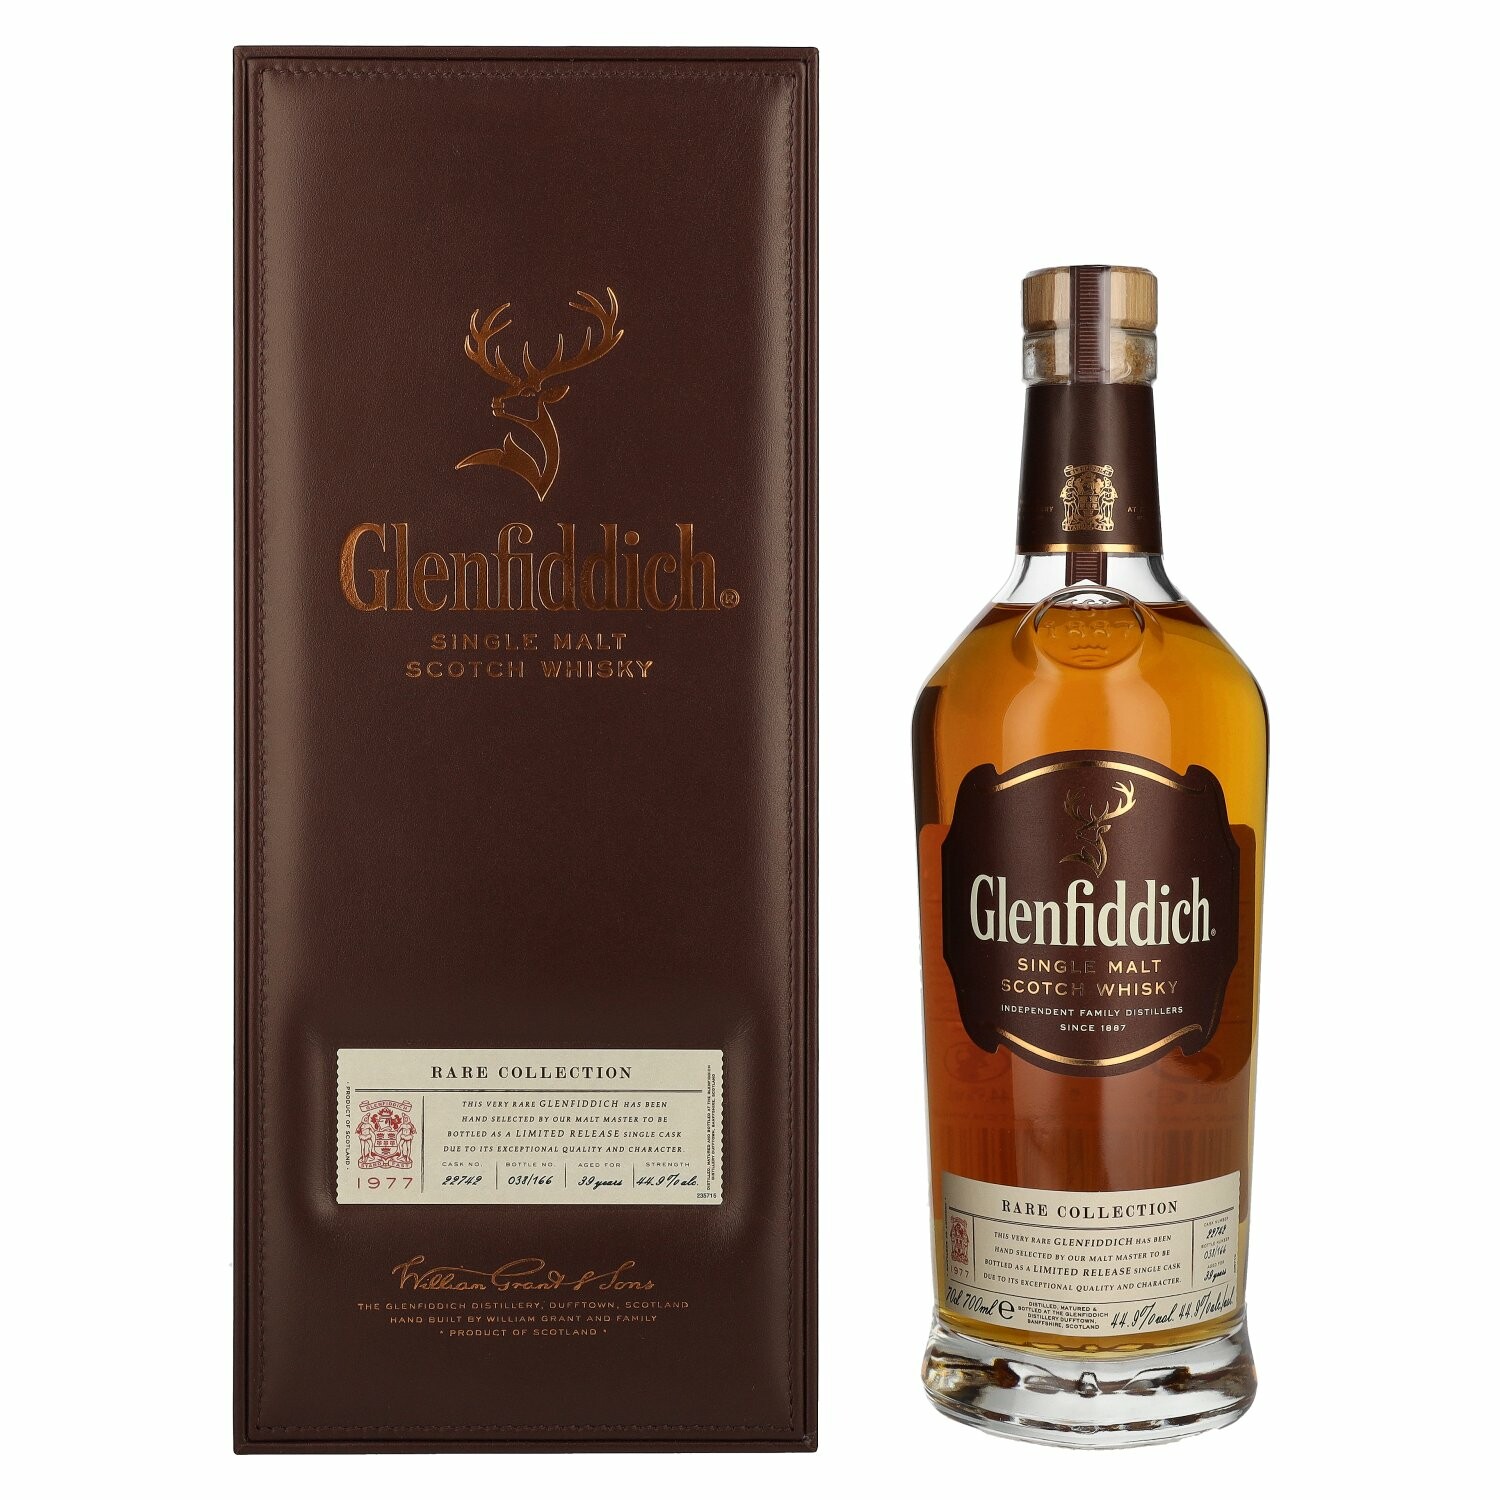 Glenfiddich 39 Years Old RARE COLLECTION Single Malt 1977 44,9% Vol. 0,7l in Giftbox